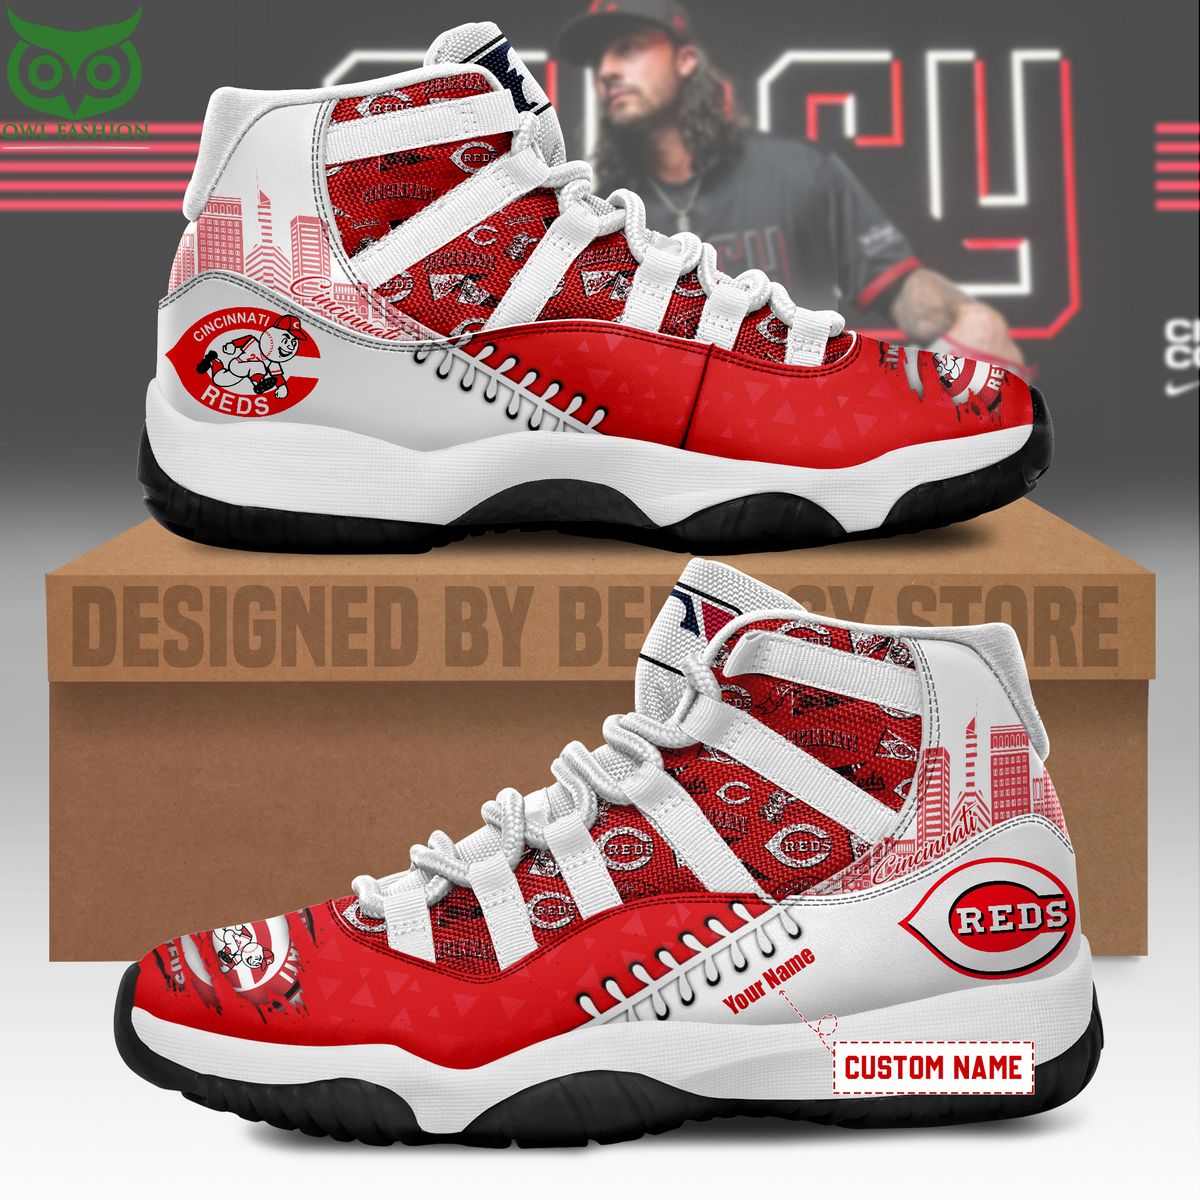 cincinnati reds custom shoes limited edition aj 11 mlb air jordan 1 6Zhlp.jpg